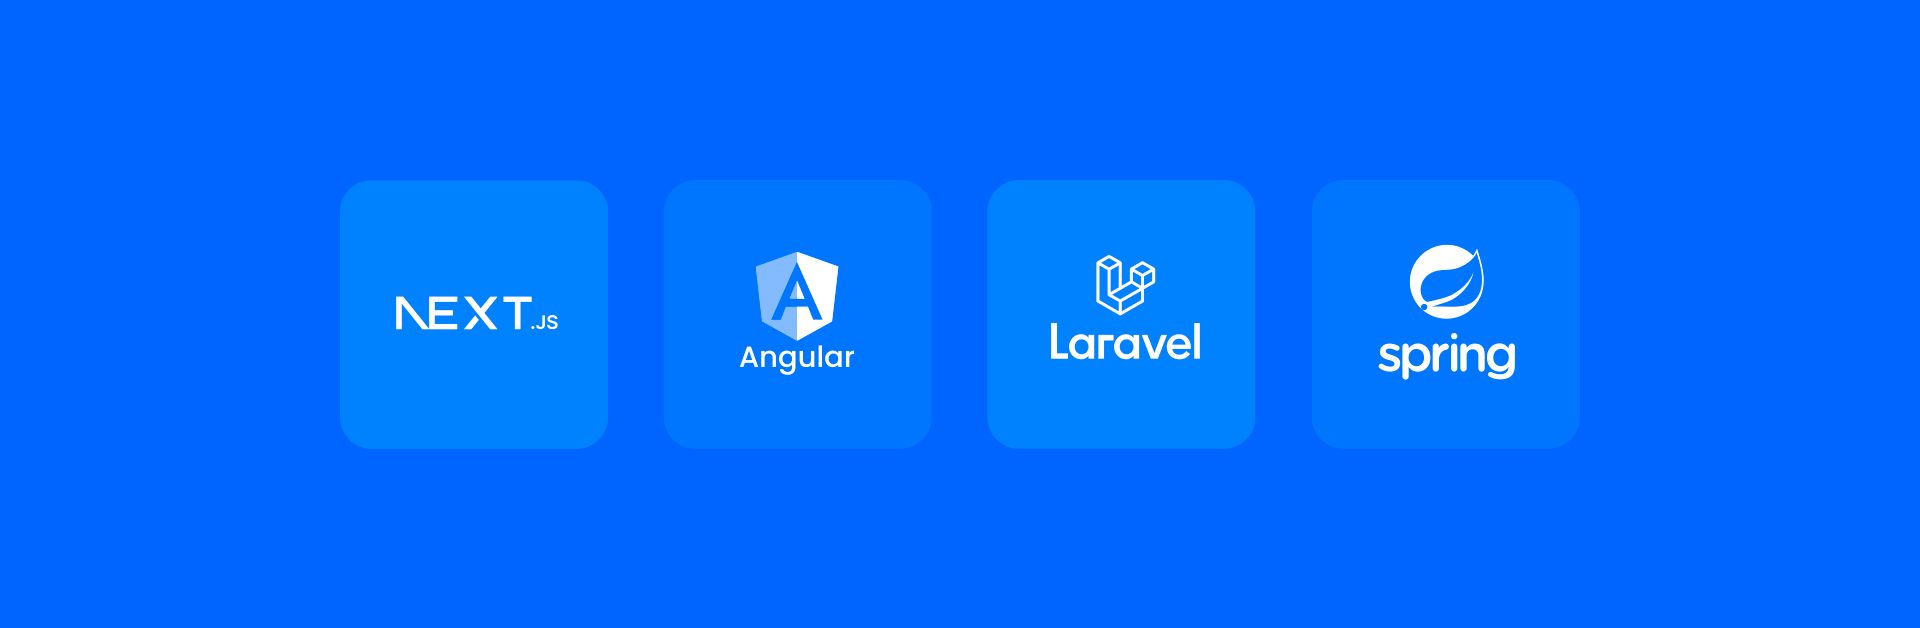 Examples of popular frameworks: Next.js, Angular, Laravel, and Spring.